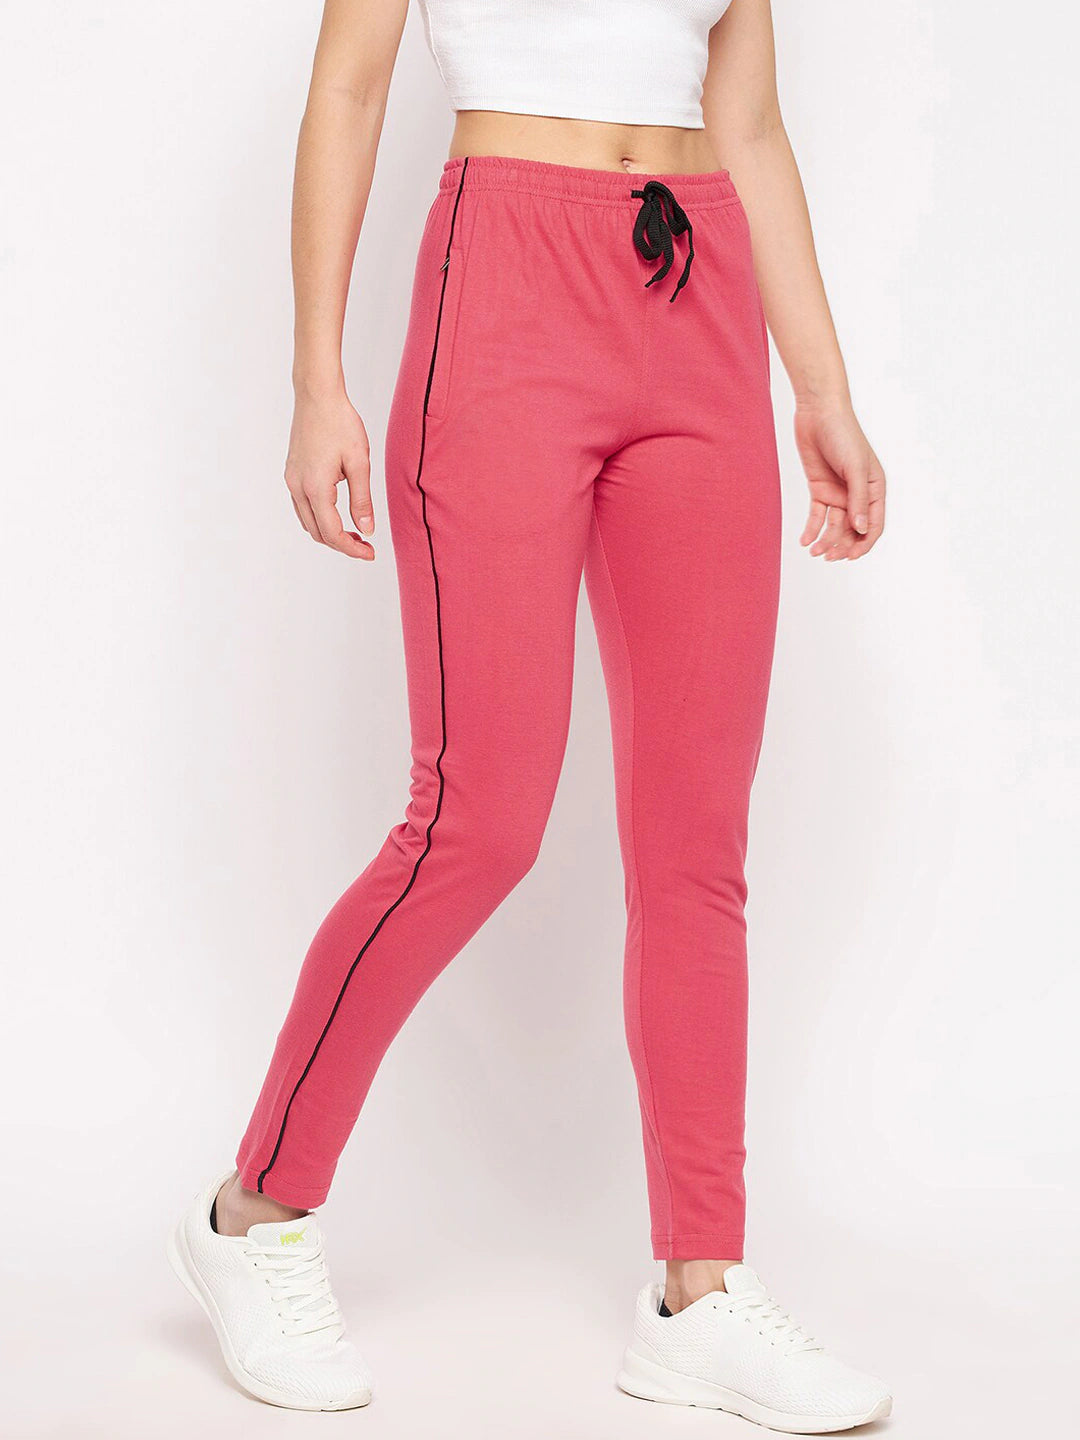 Buy SHAUN Women's Cotton Track Pants (Pack of 4)  (642WN4_RXNP40_Multi-Coloured_Medium) at Amazon.in